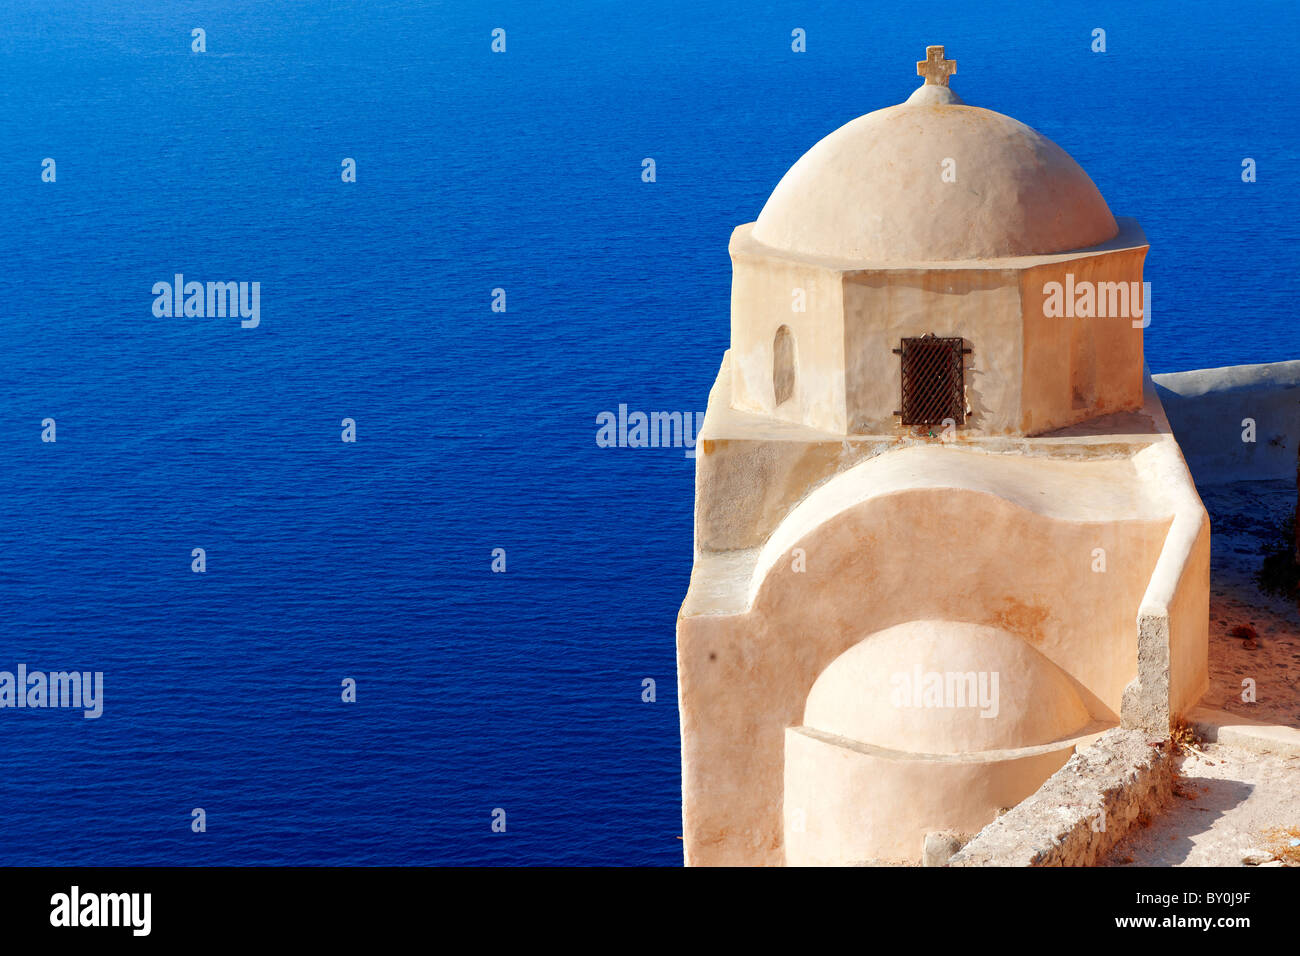 Oia (Ia) Santorini iglesias ortodoxas - Griego islas Cícladas - fotos, dibujos e imágenes Foto de stock